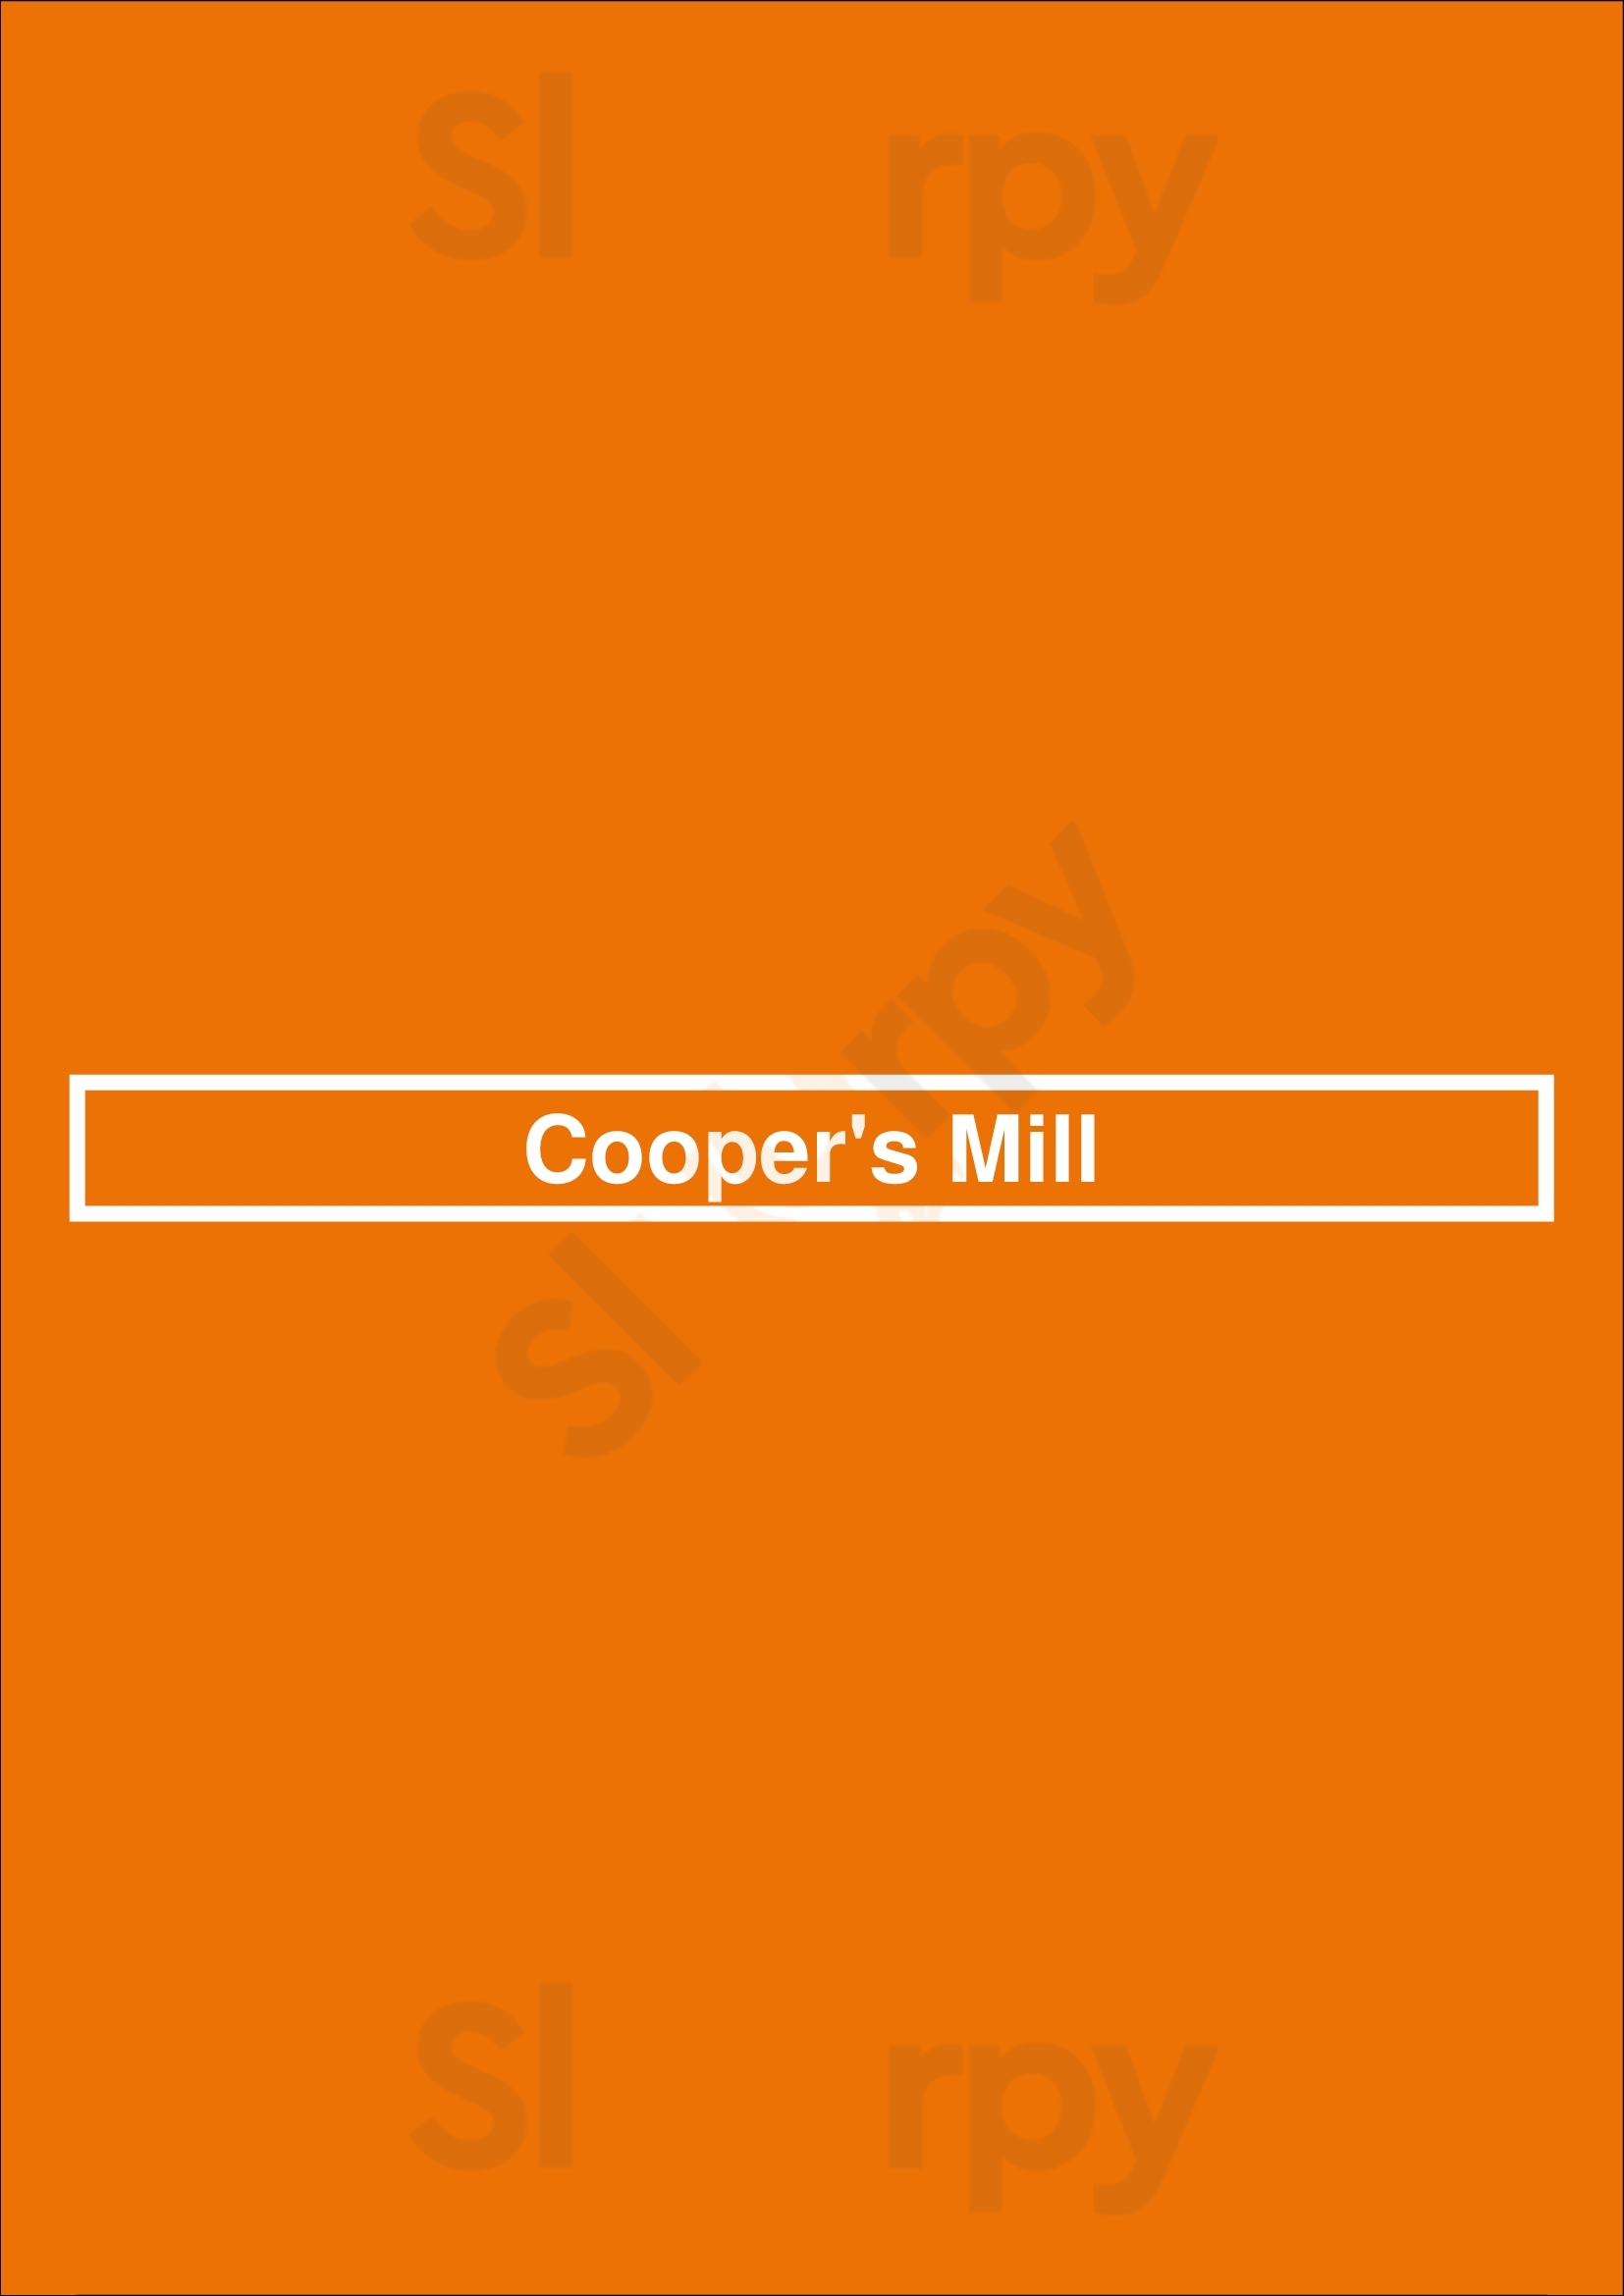 Cooper's Mill Bethesda Menu - 1